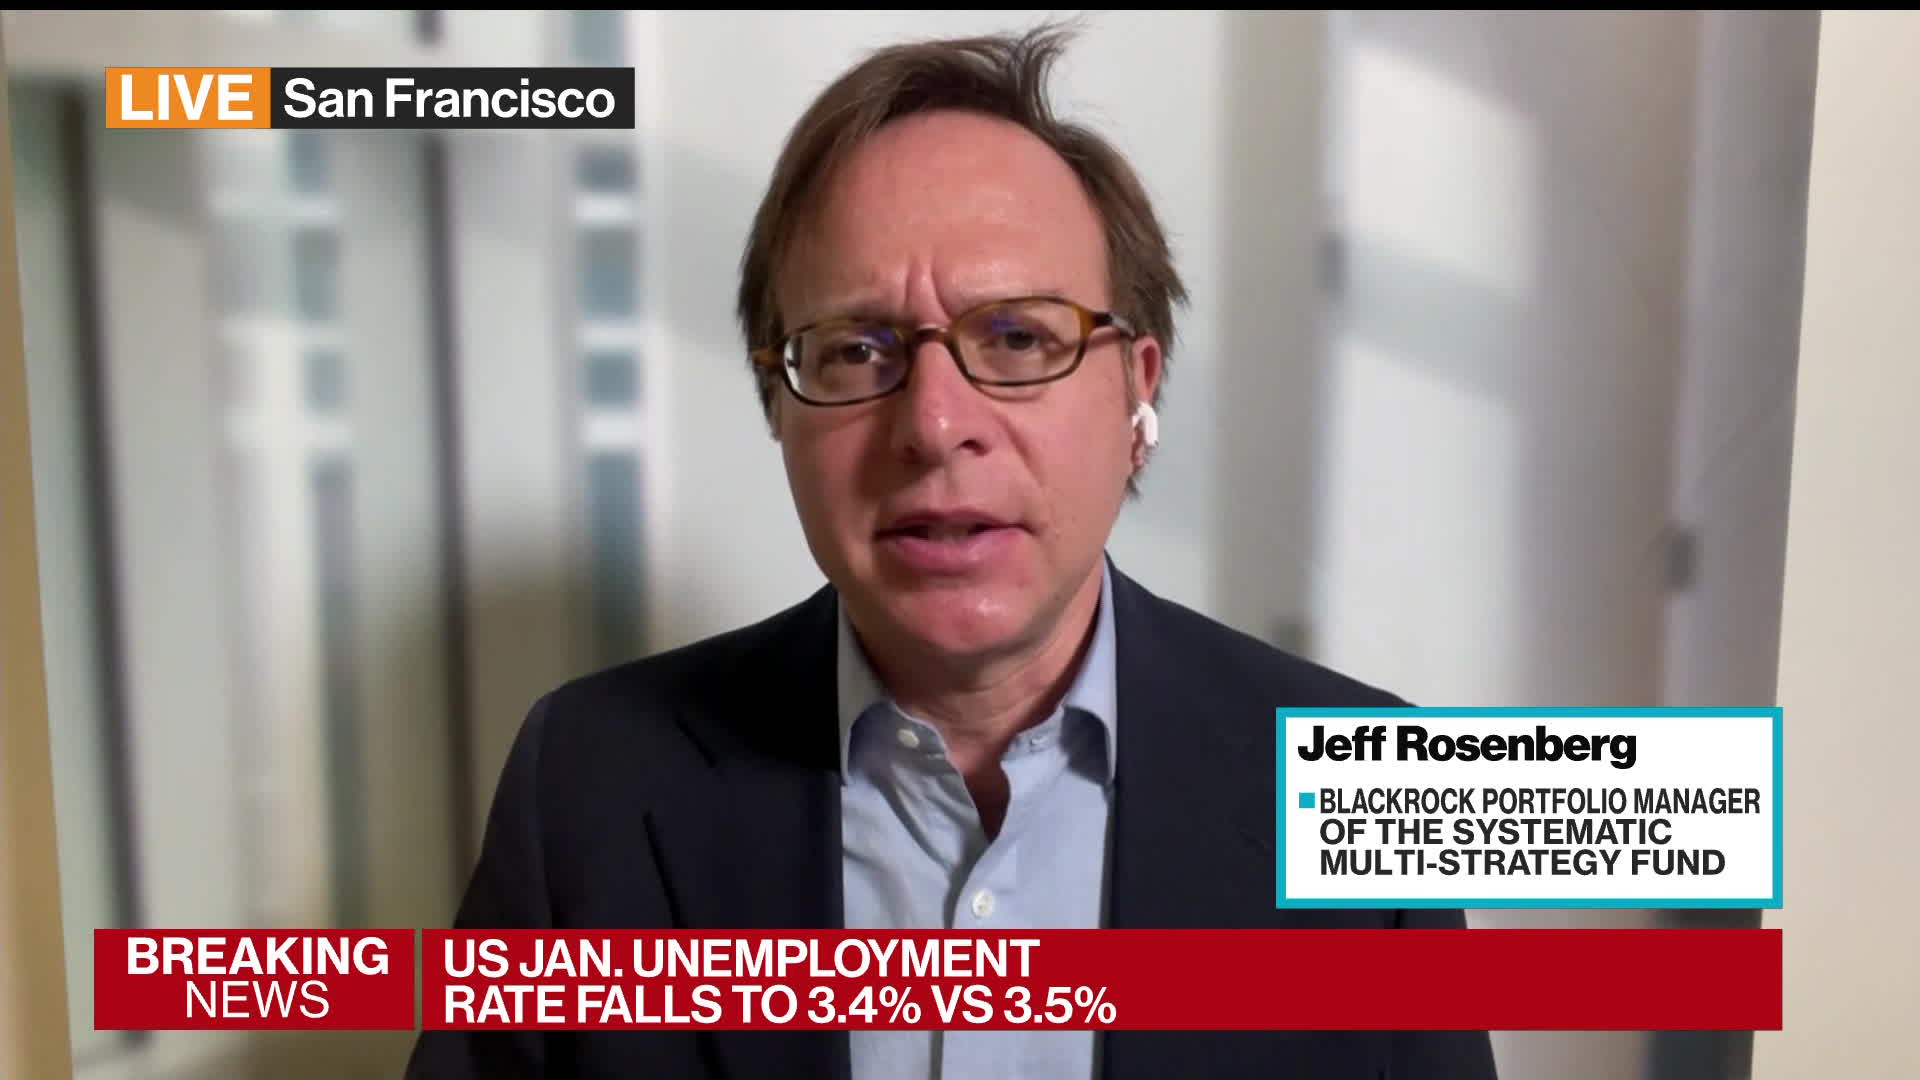 Jobs Report ‘Big Push Back to the Slowing’: BlackRock’s Rosenberg